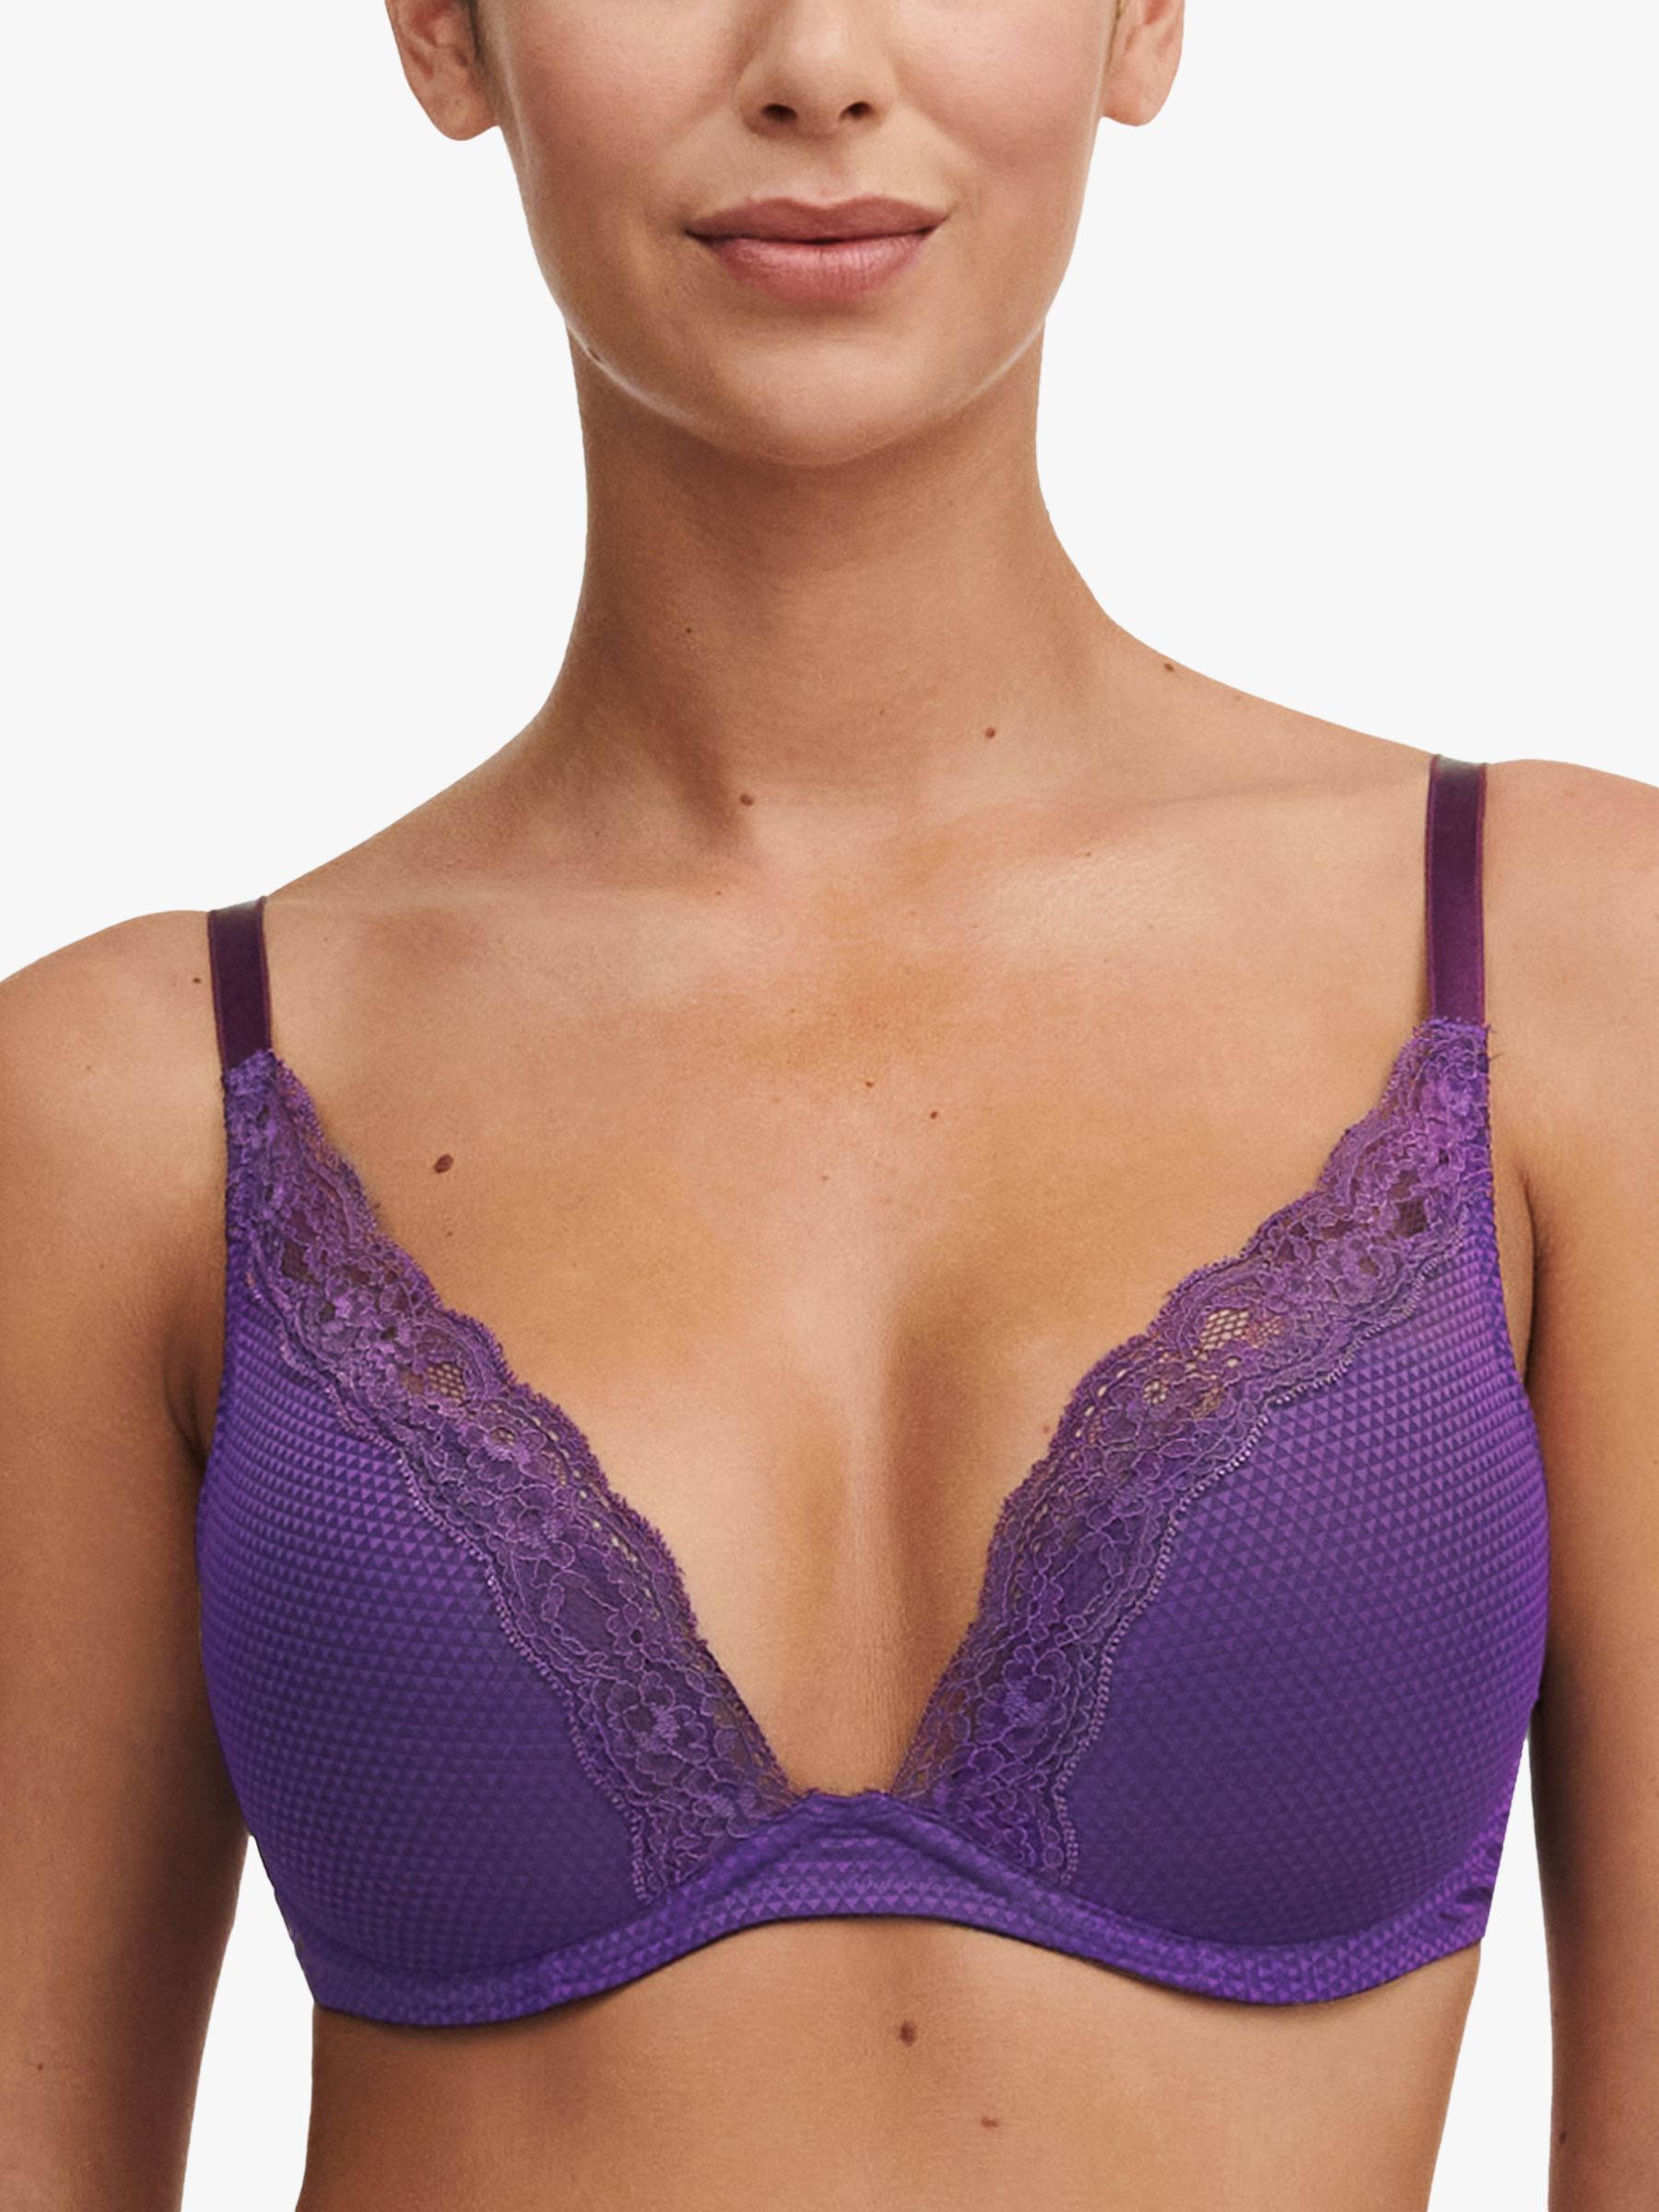 Ladies George 36DD bras padded & underwired 1 purple 1 mauve good condition